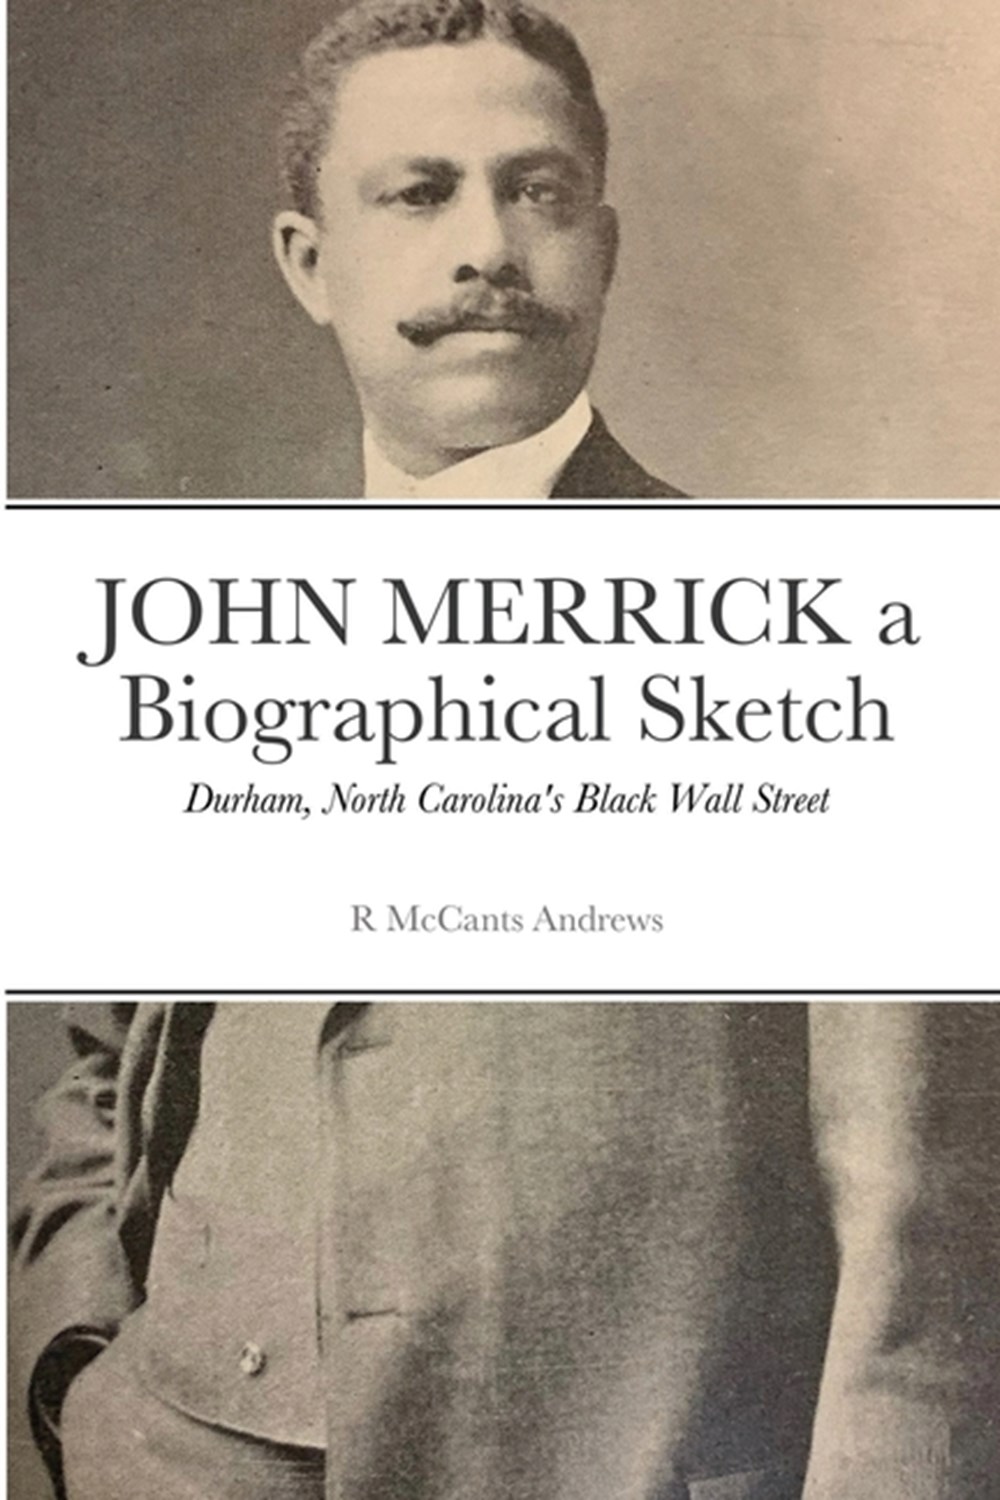 JOHN MERRICK a Biographical Sketch: Durham, North Carolina's Black Wall Street